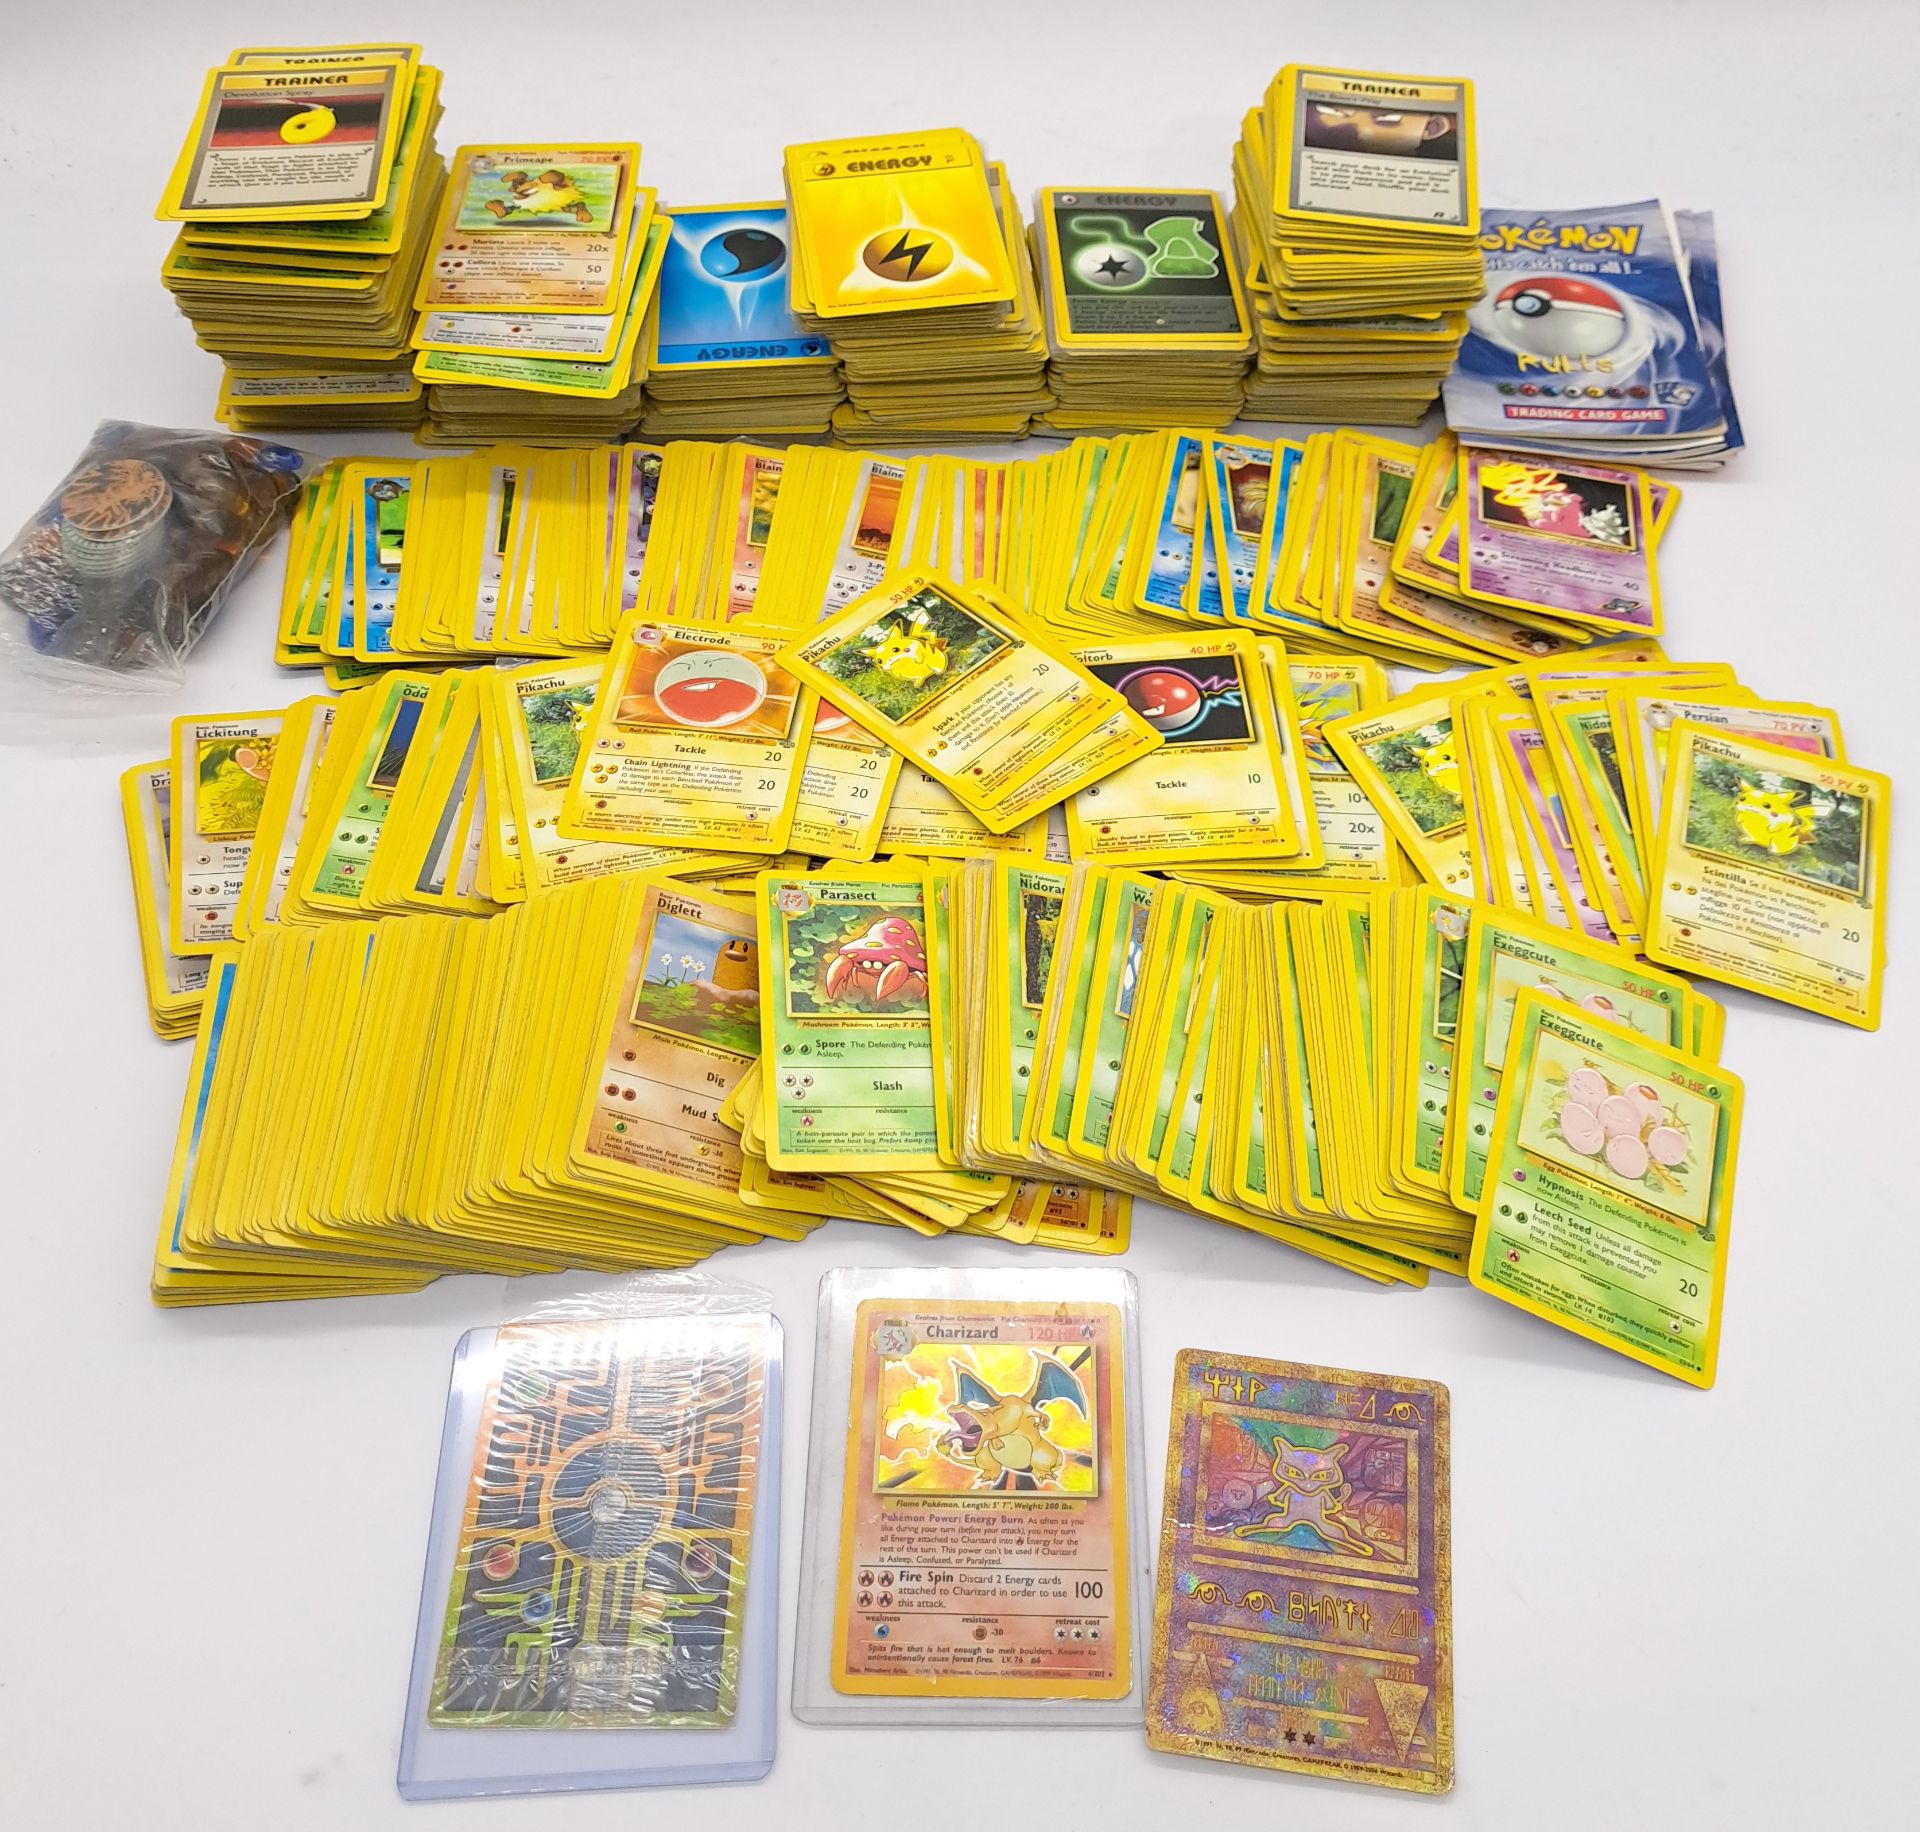 Quantity of Pokemon Trading Cards